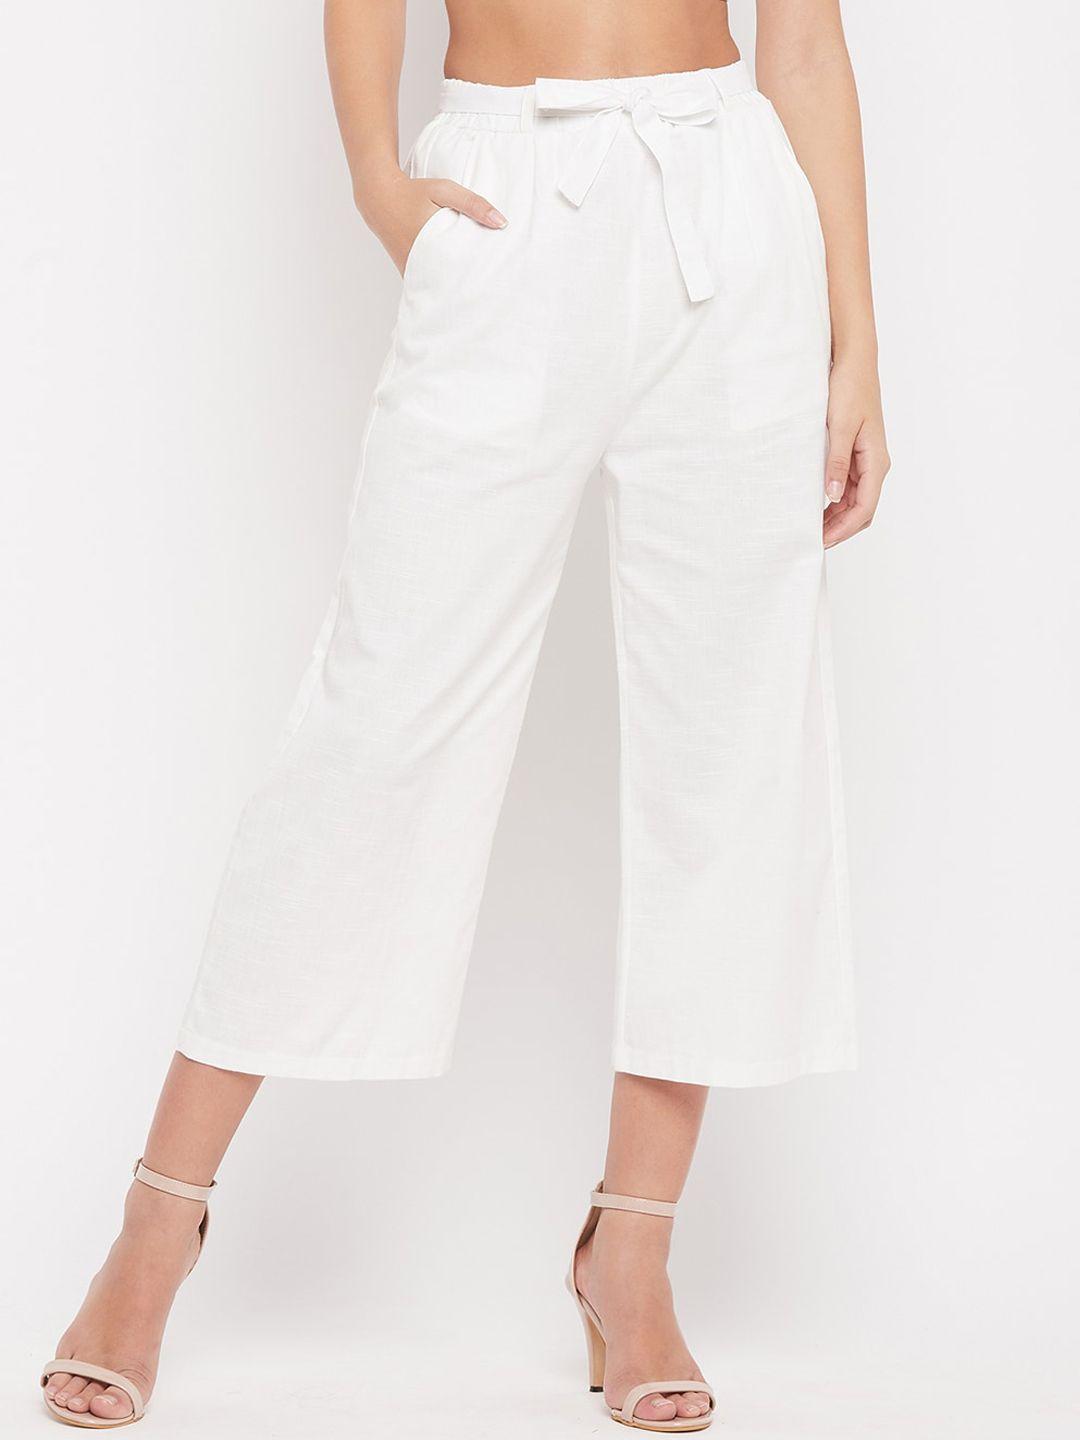 duke women white high-rise culottes trousers